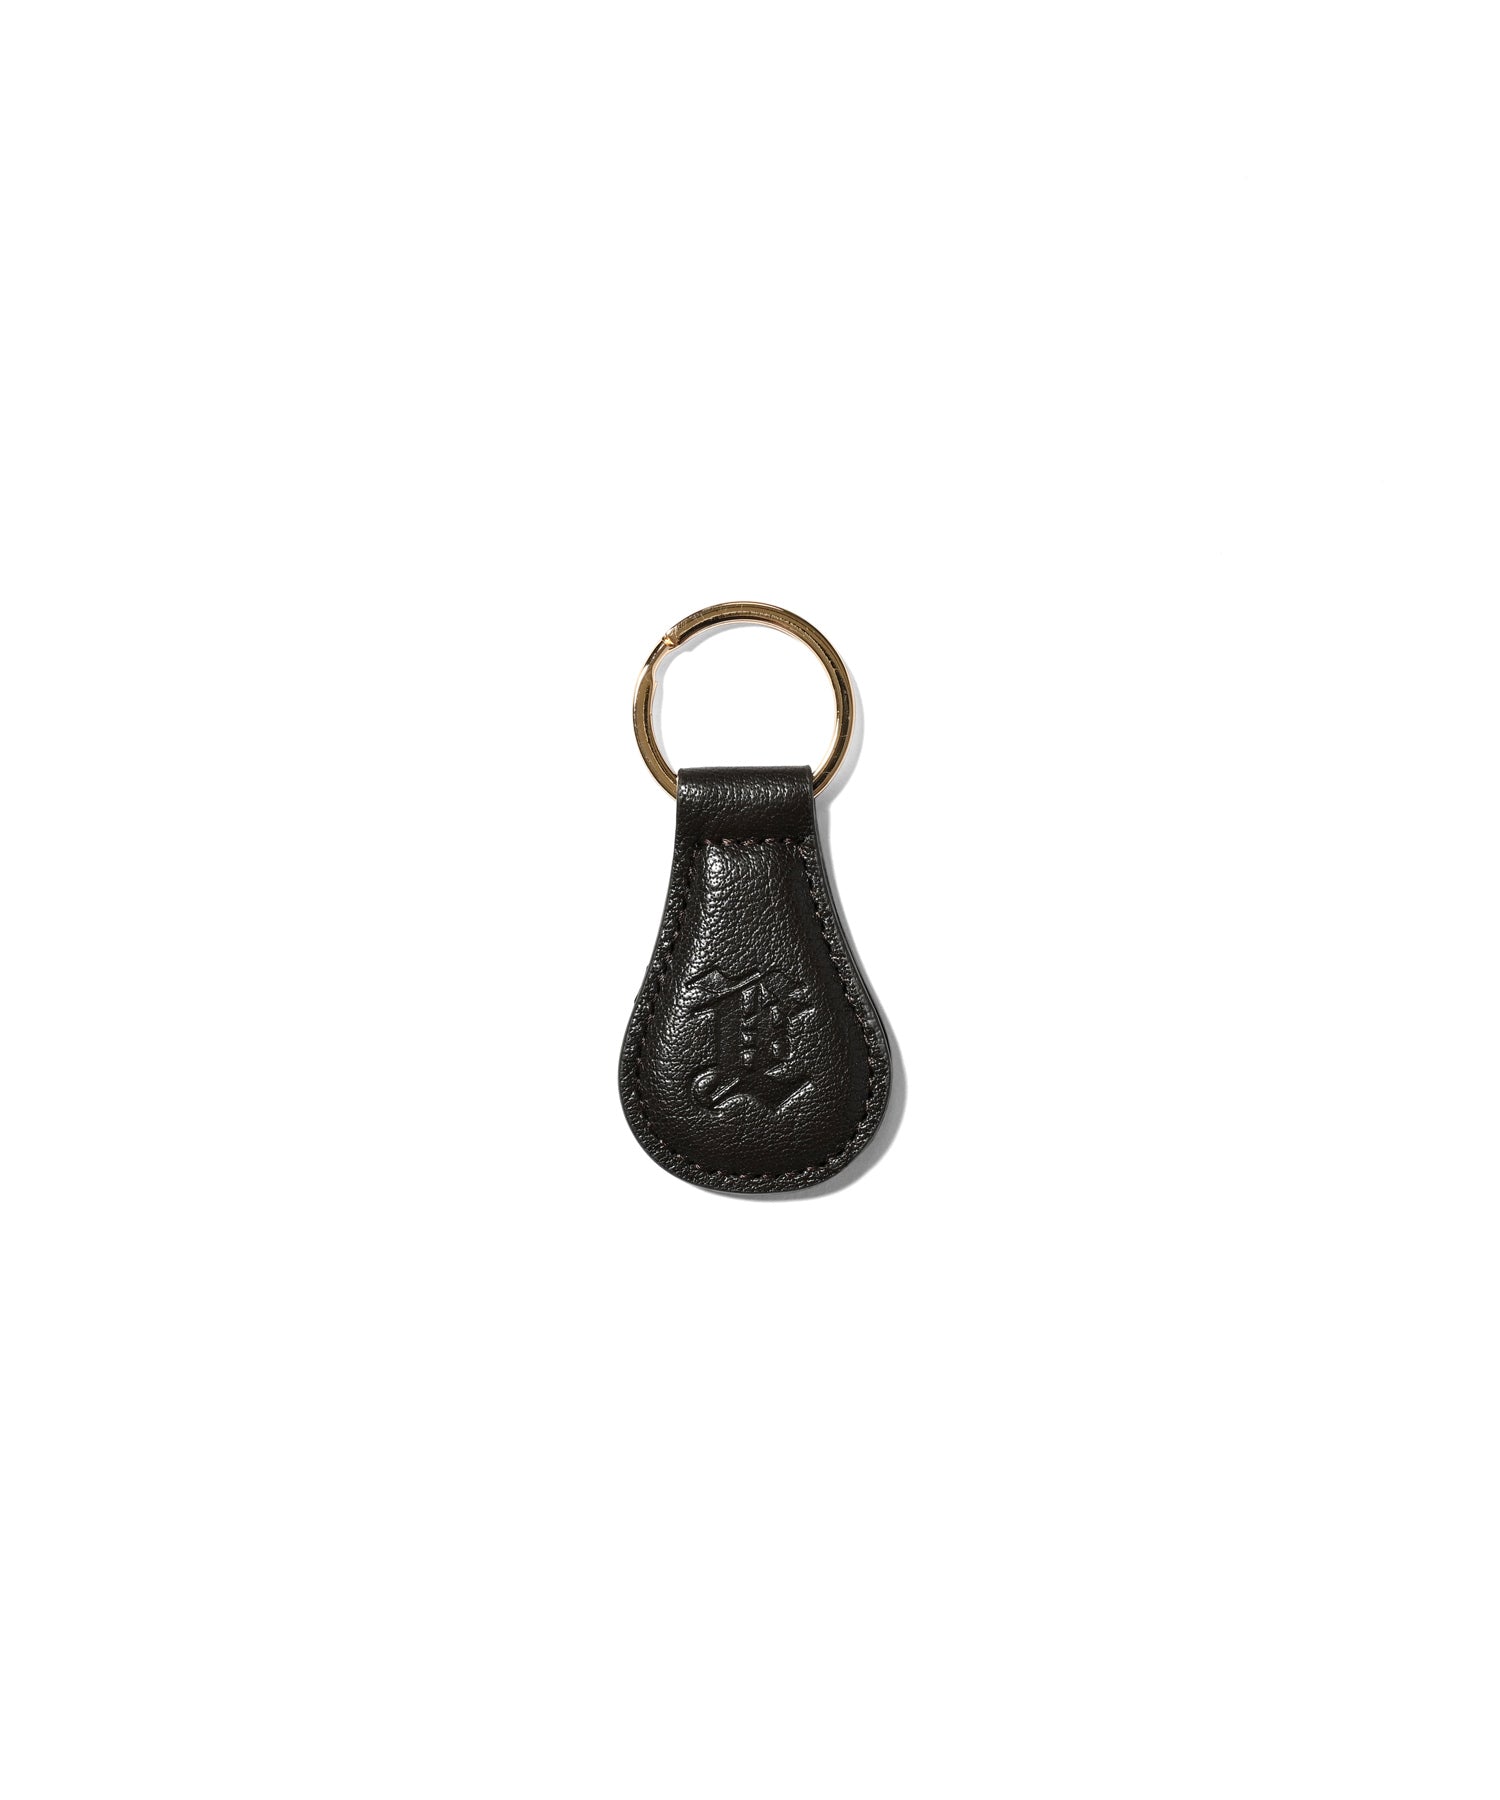 LFYT 字母組合 LF 標誌皮革鑰匙圈 LA221702 棕色